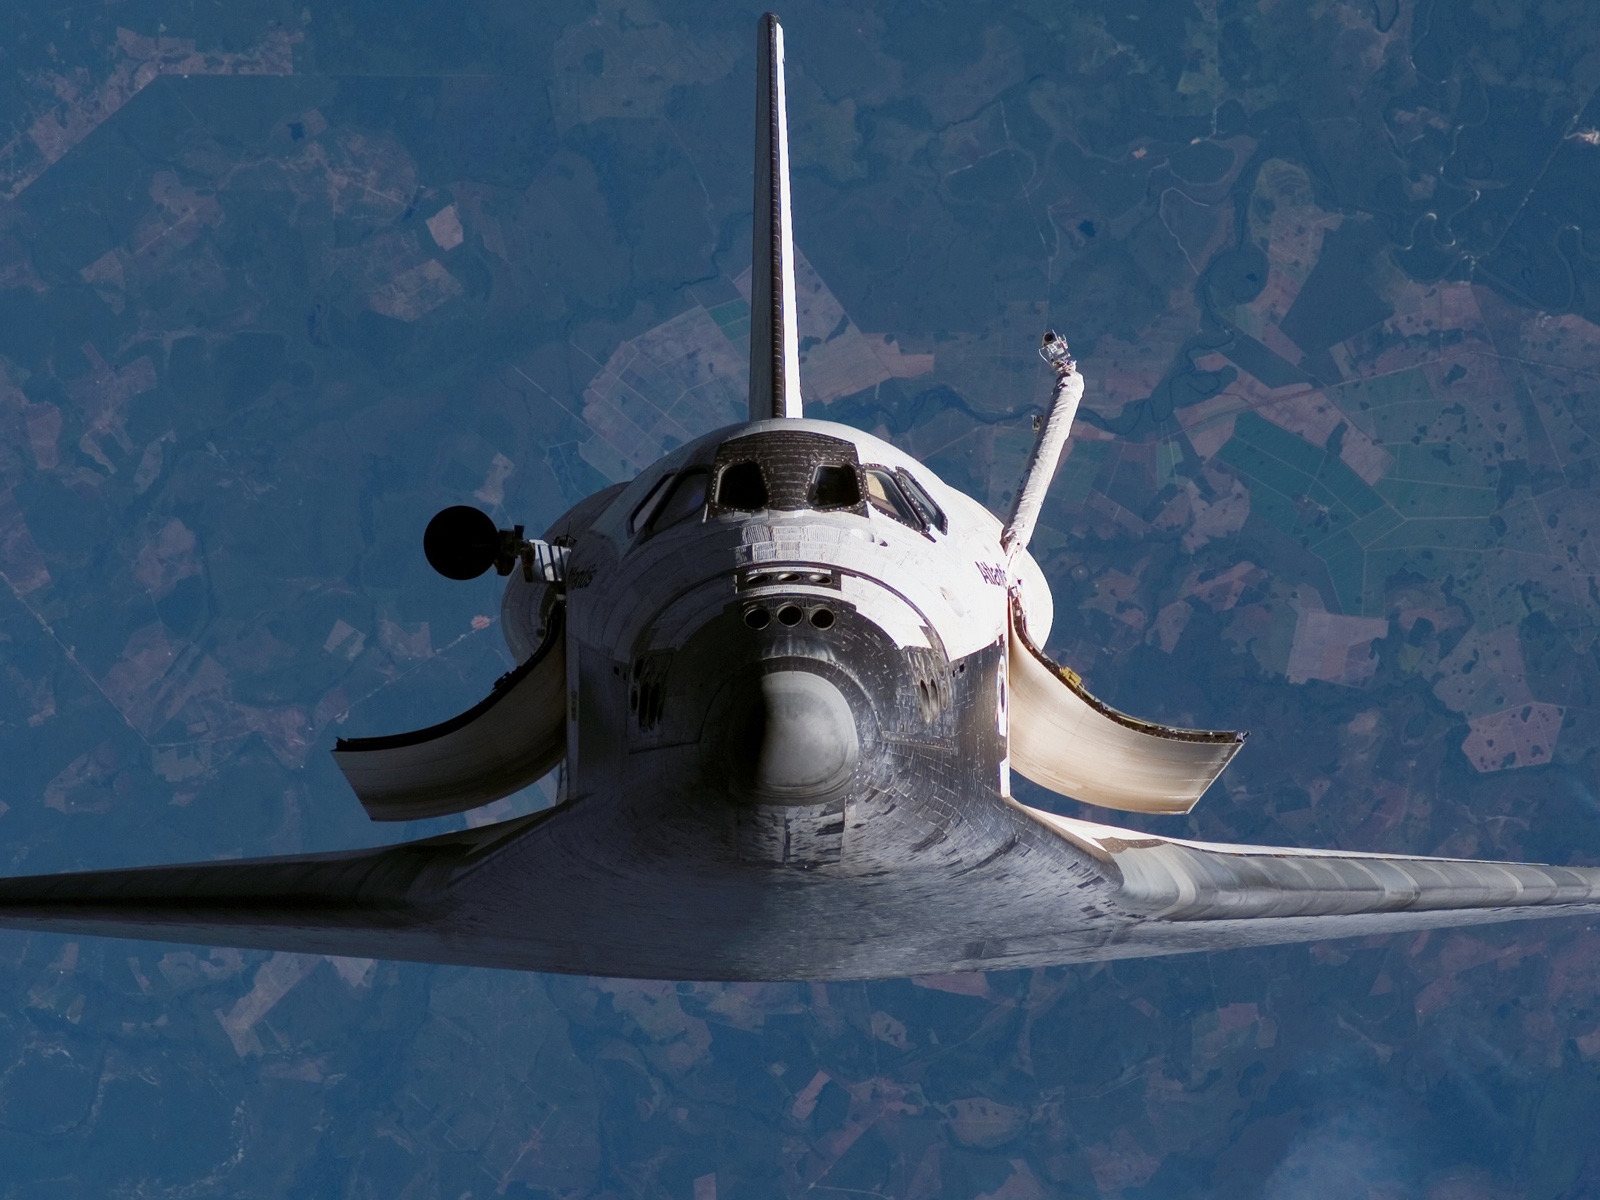 Space shuttle orbit for 1600 x 1200 resolution